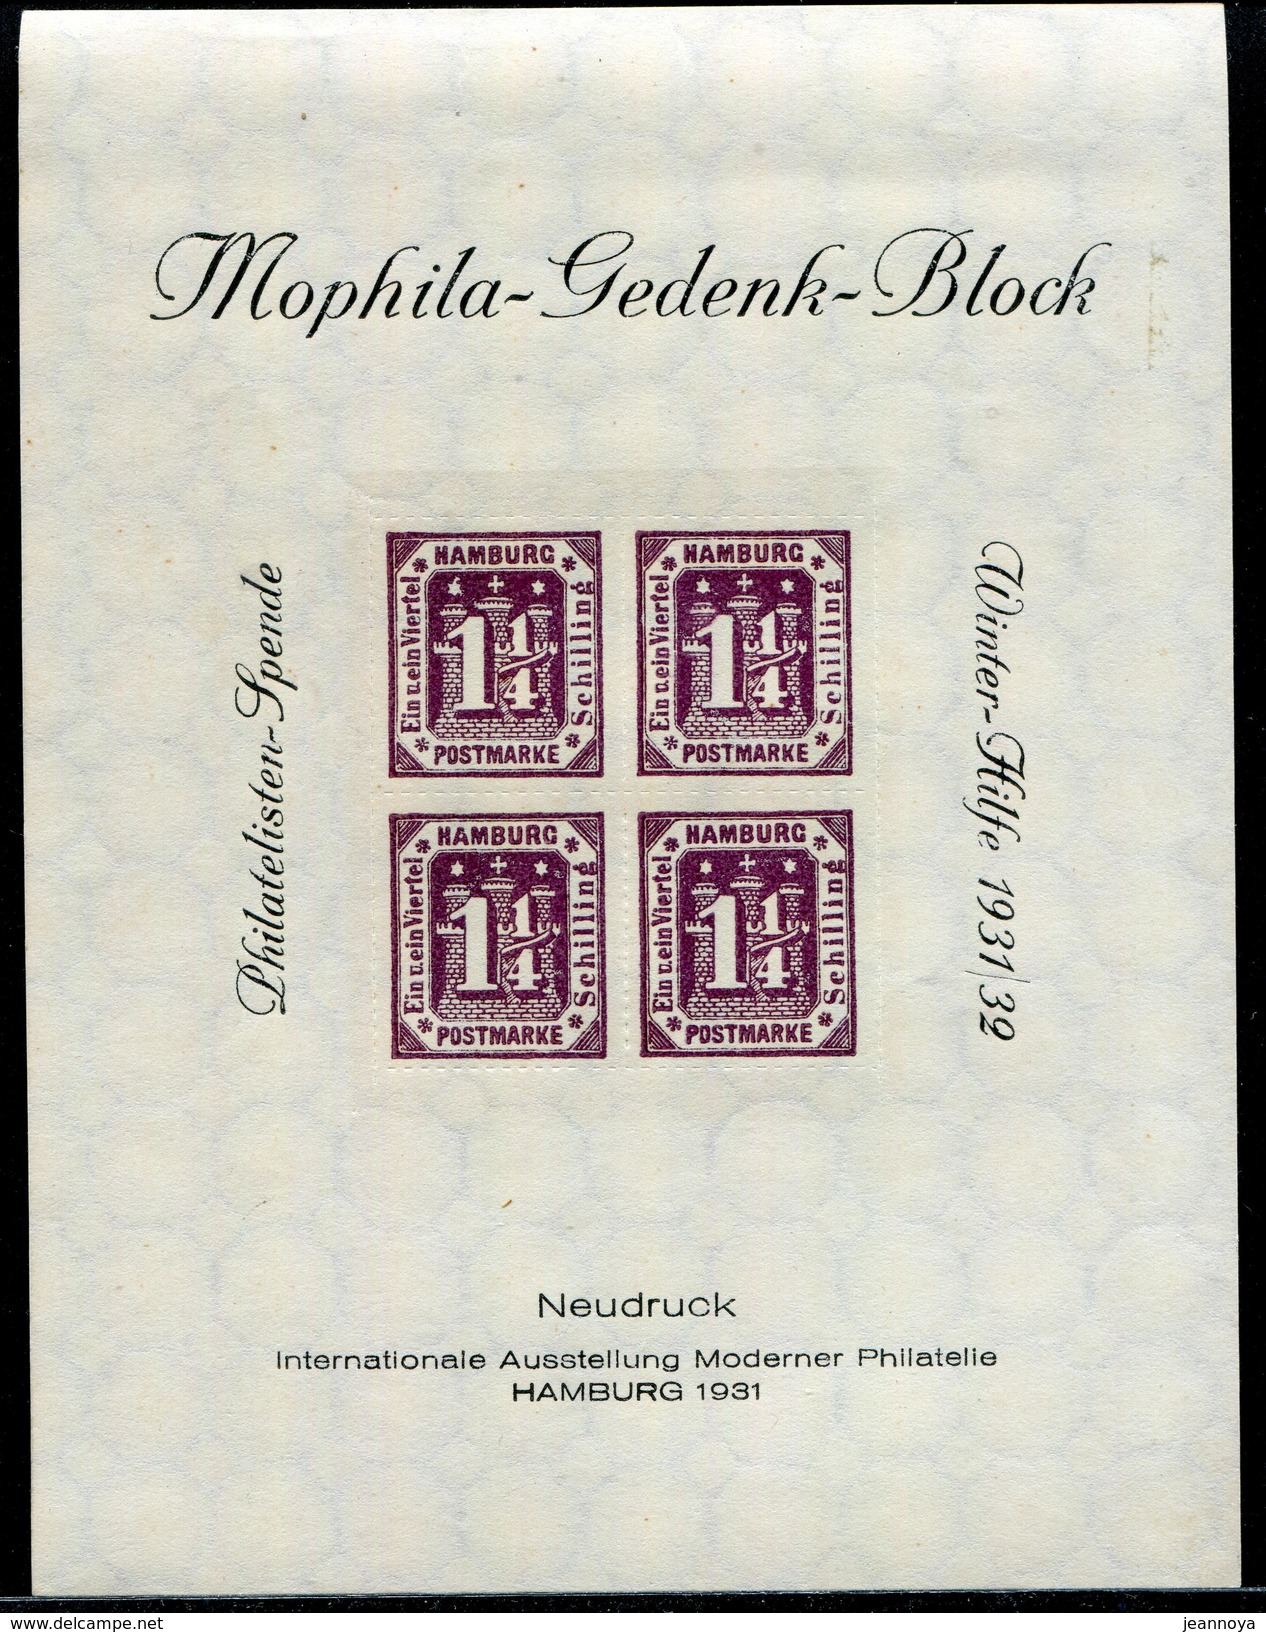 ALLEMAGNE - HAMBURG - SIMILI B.F. MOPHILA GEDENK BLOCK DE 1931 - ** - SUP - Hamburg